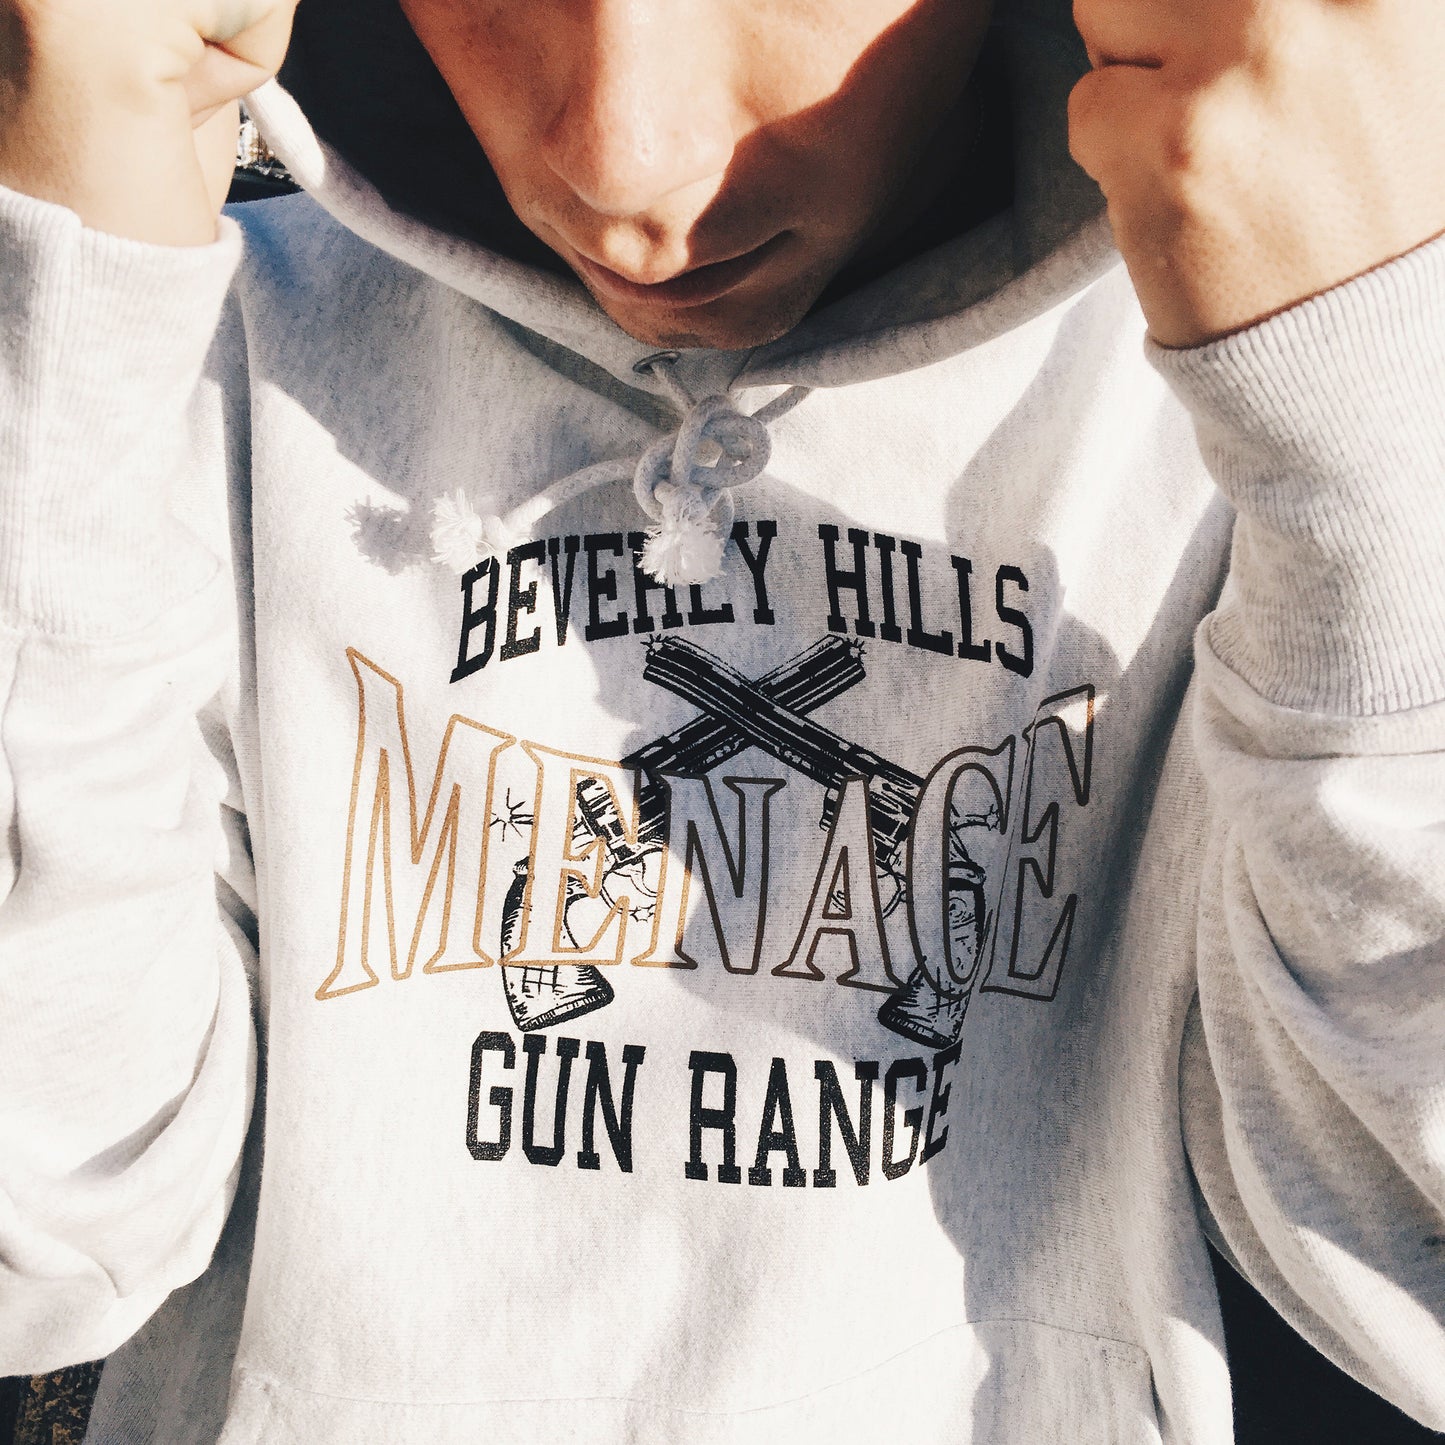 BEVERLY HILLS GUN RANGE HOODIE by MENACE